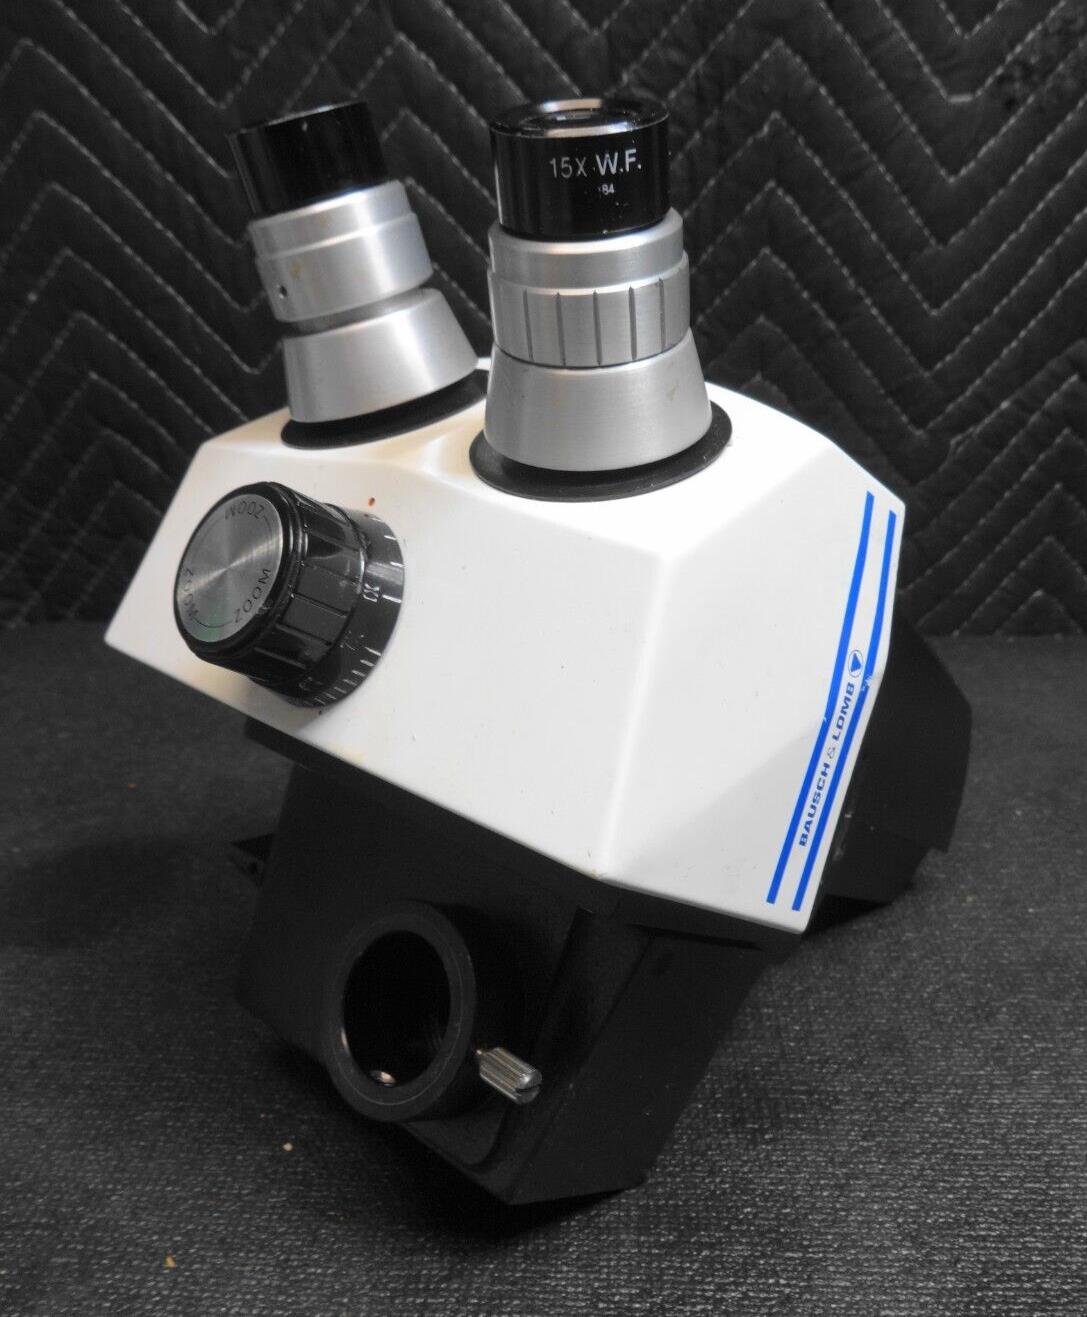 Bausch & Lomb StereoZoom 7 Microscope Head Range 1.0X-7.0X, 15X Eyepieces